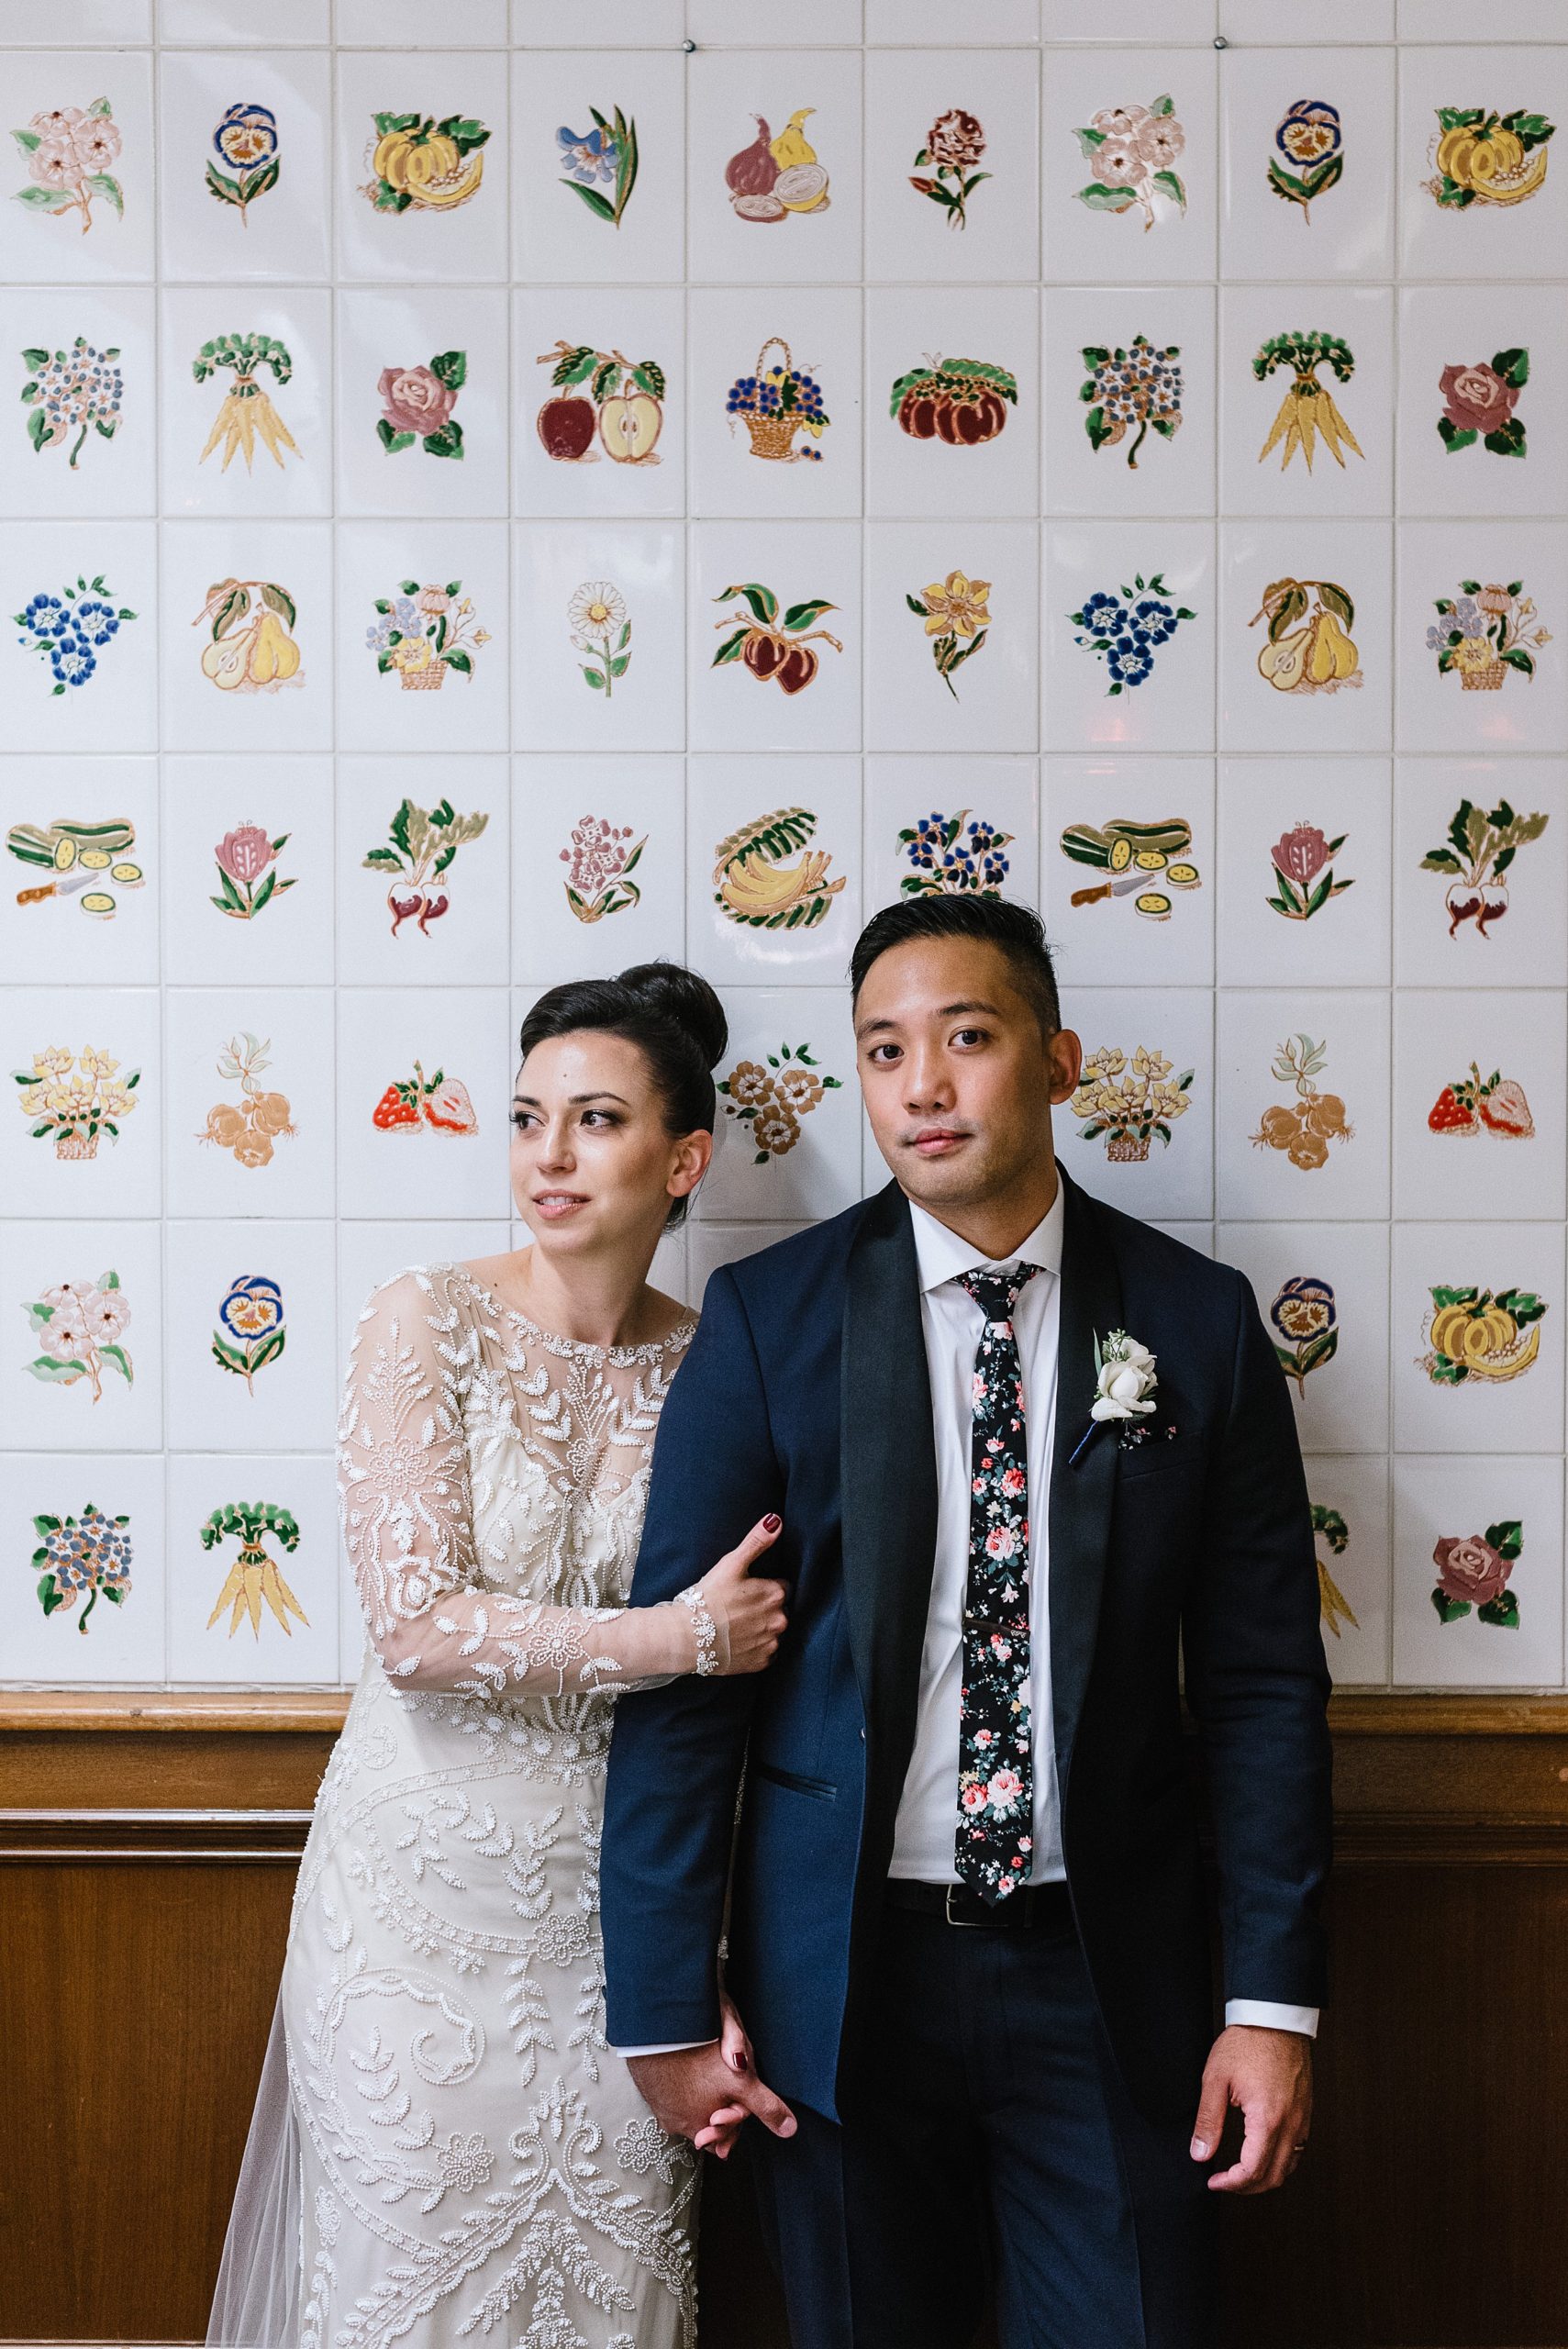 fruit tile and portrait of couple